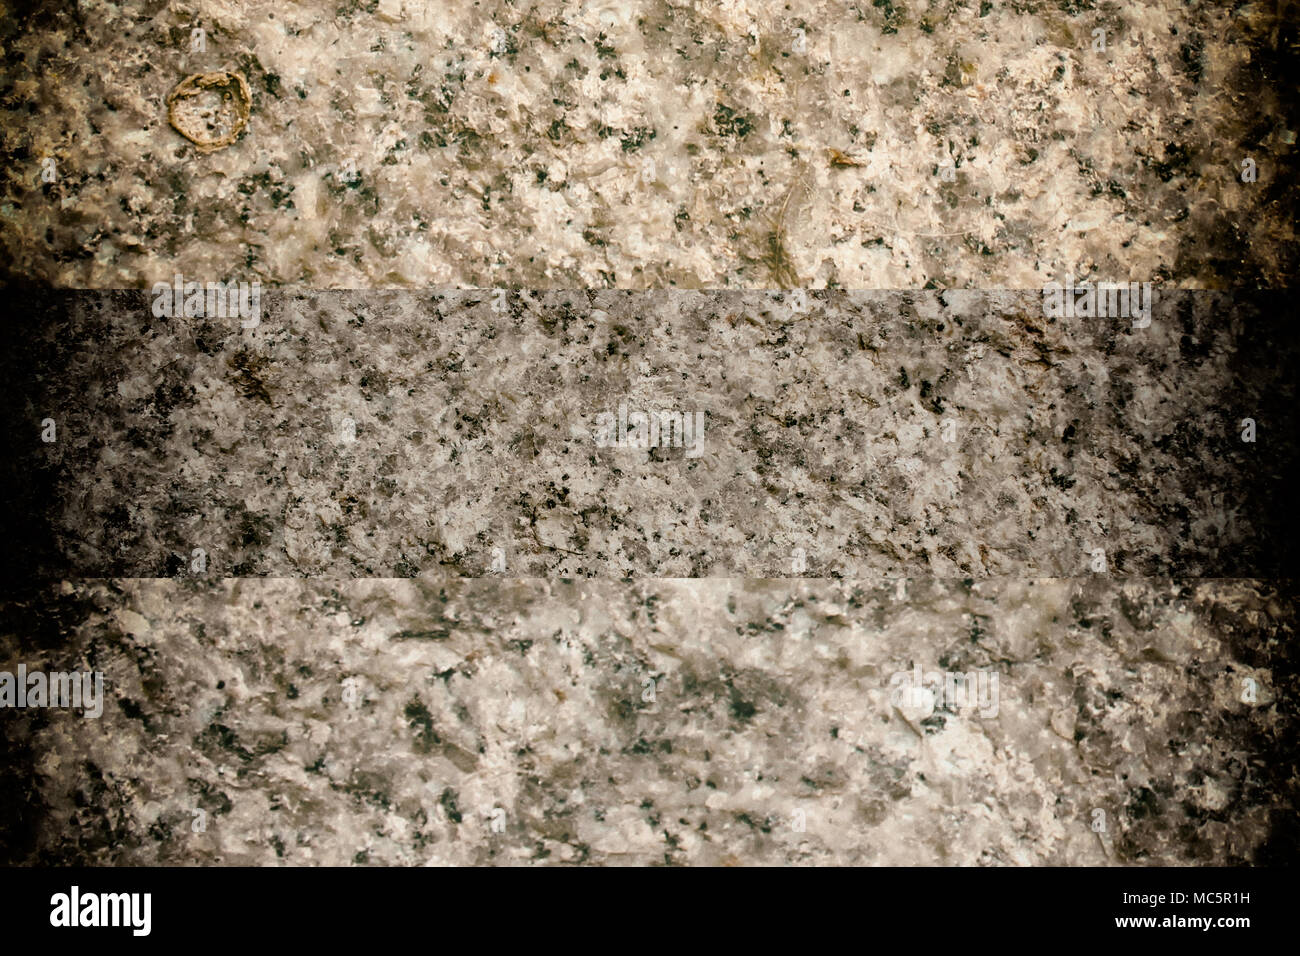 Granite rock closeup background, stone texture, cracked surface Stock Photo